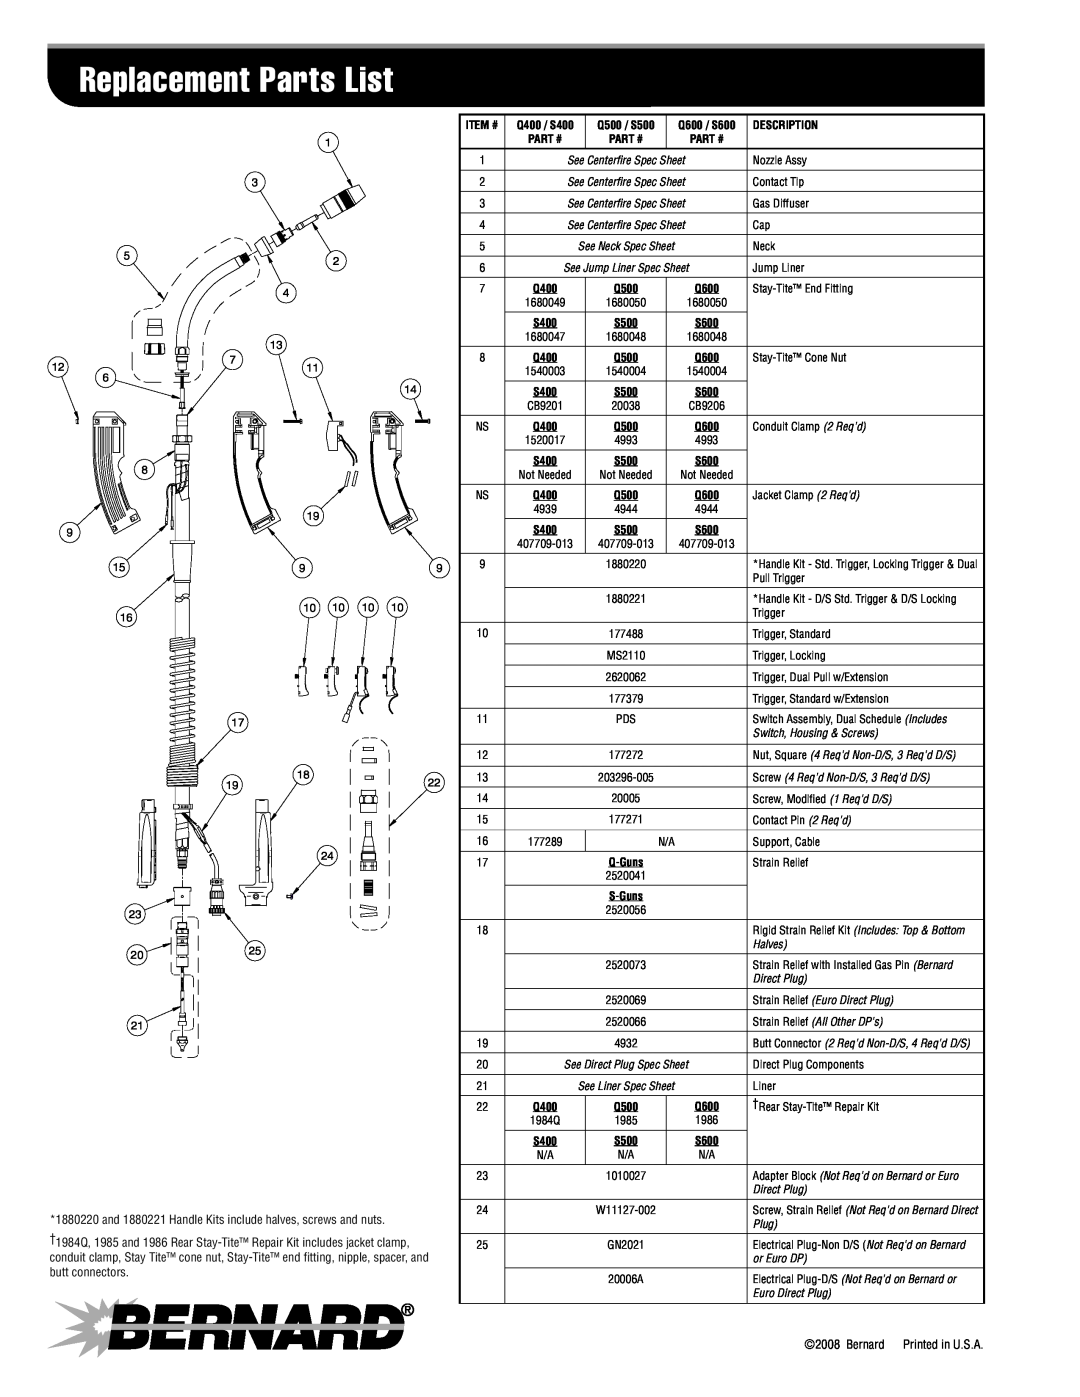 Bernard S400 manual Replacement Parts List, Item #, Q500 / S500, Q600 / S600, Description 